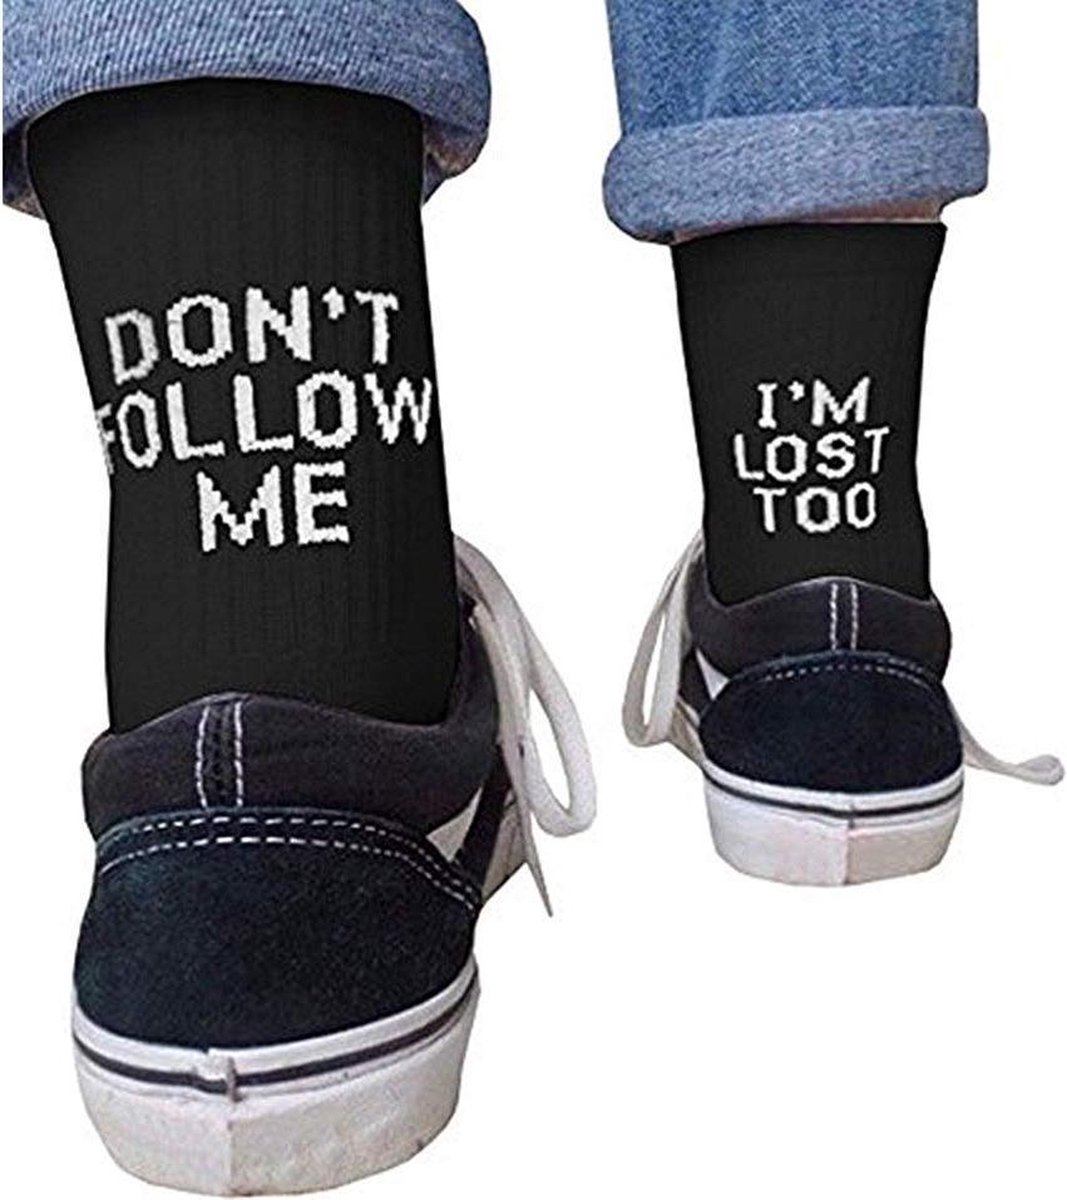 Sokken met grappige tekst: Don’t Follow Me, I'm lost too - Zwarte Sportsokken maat 37-42